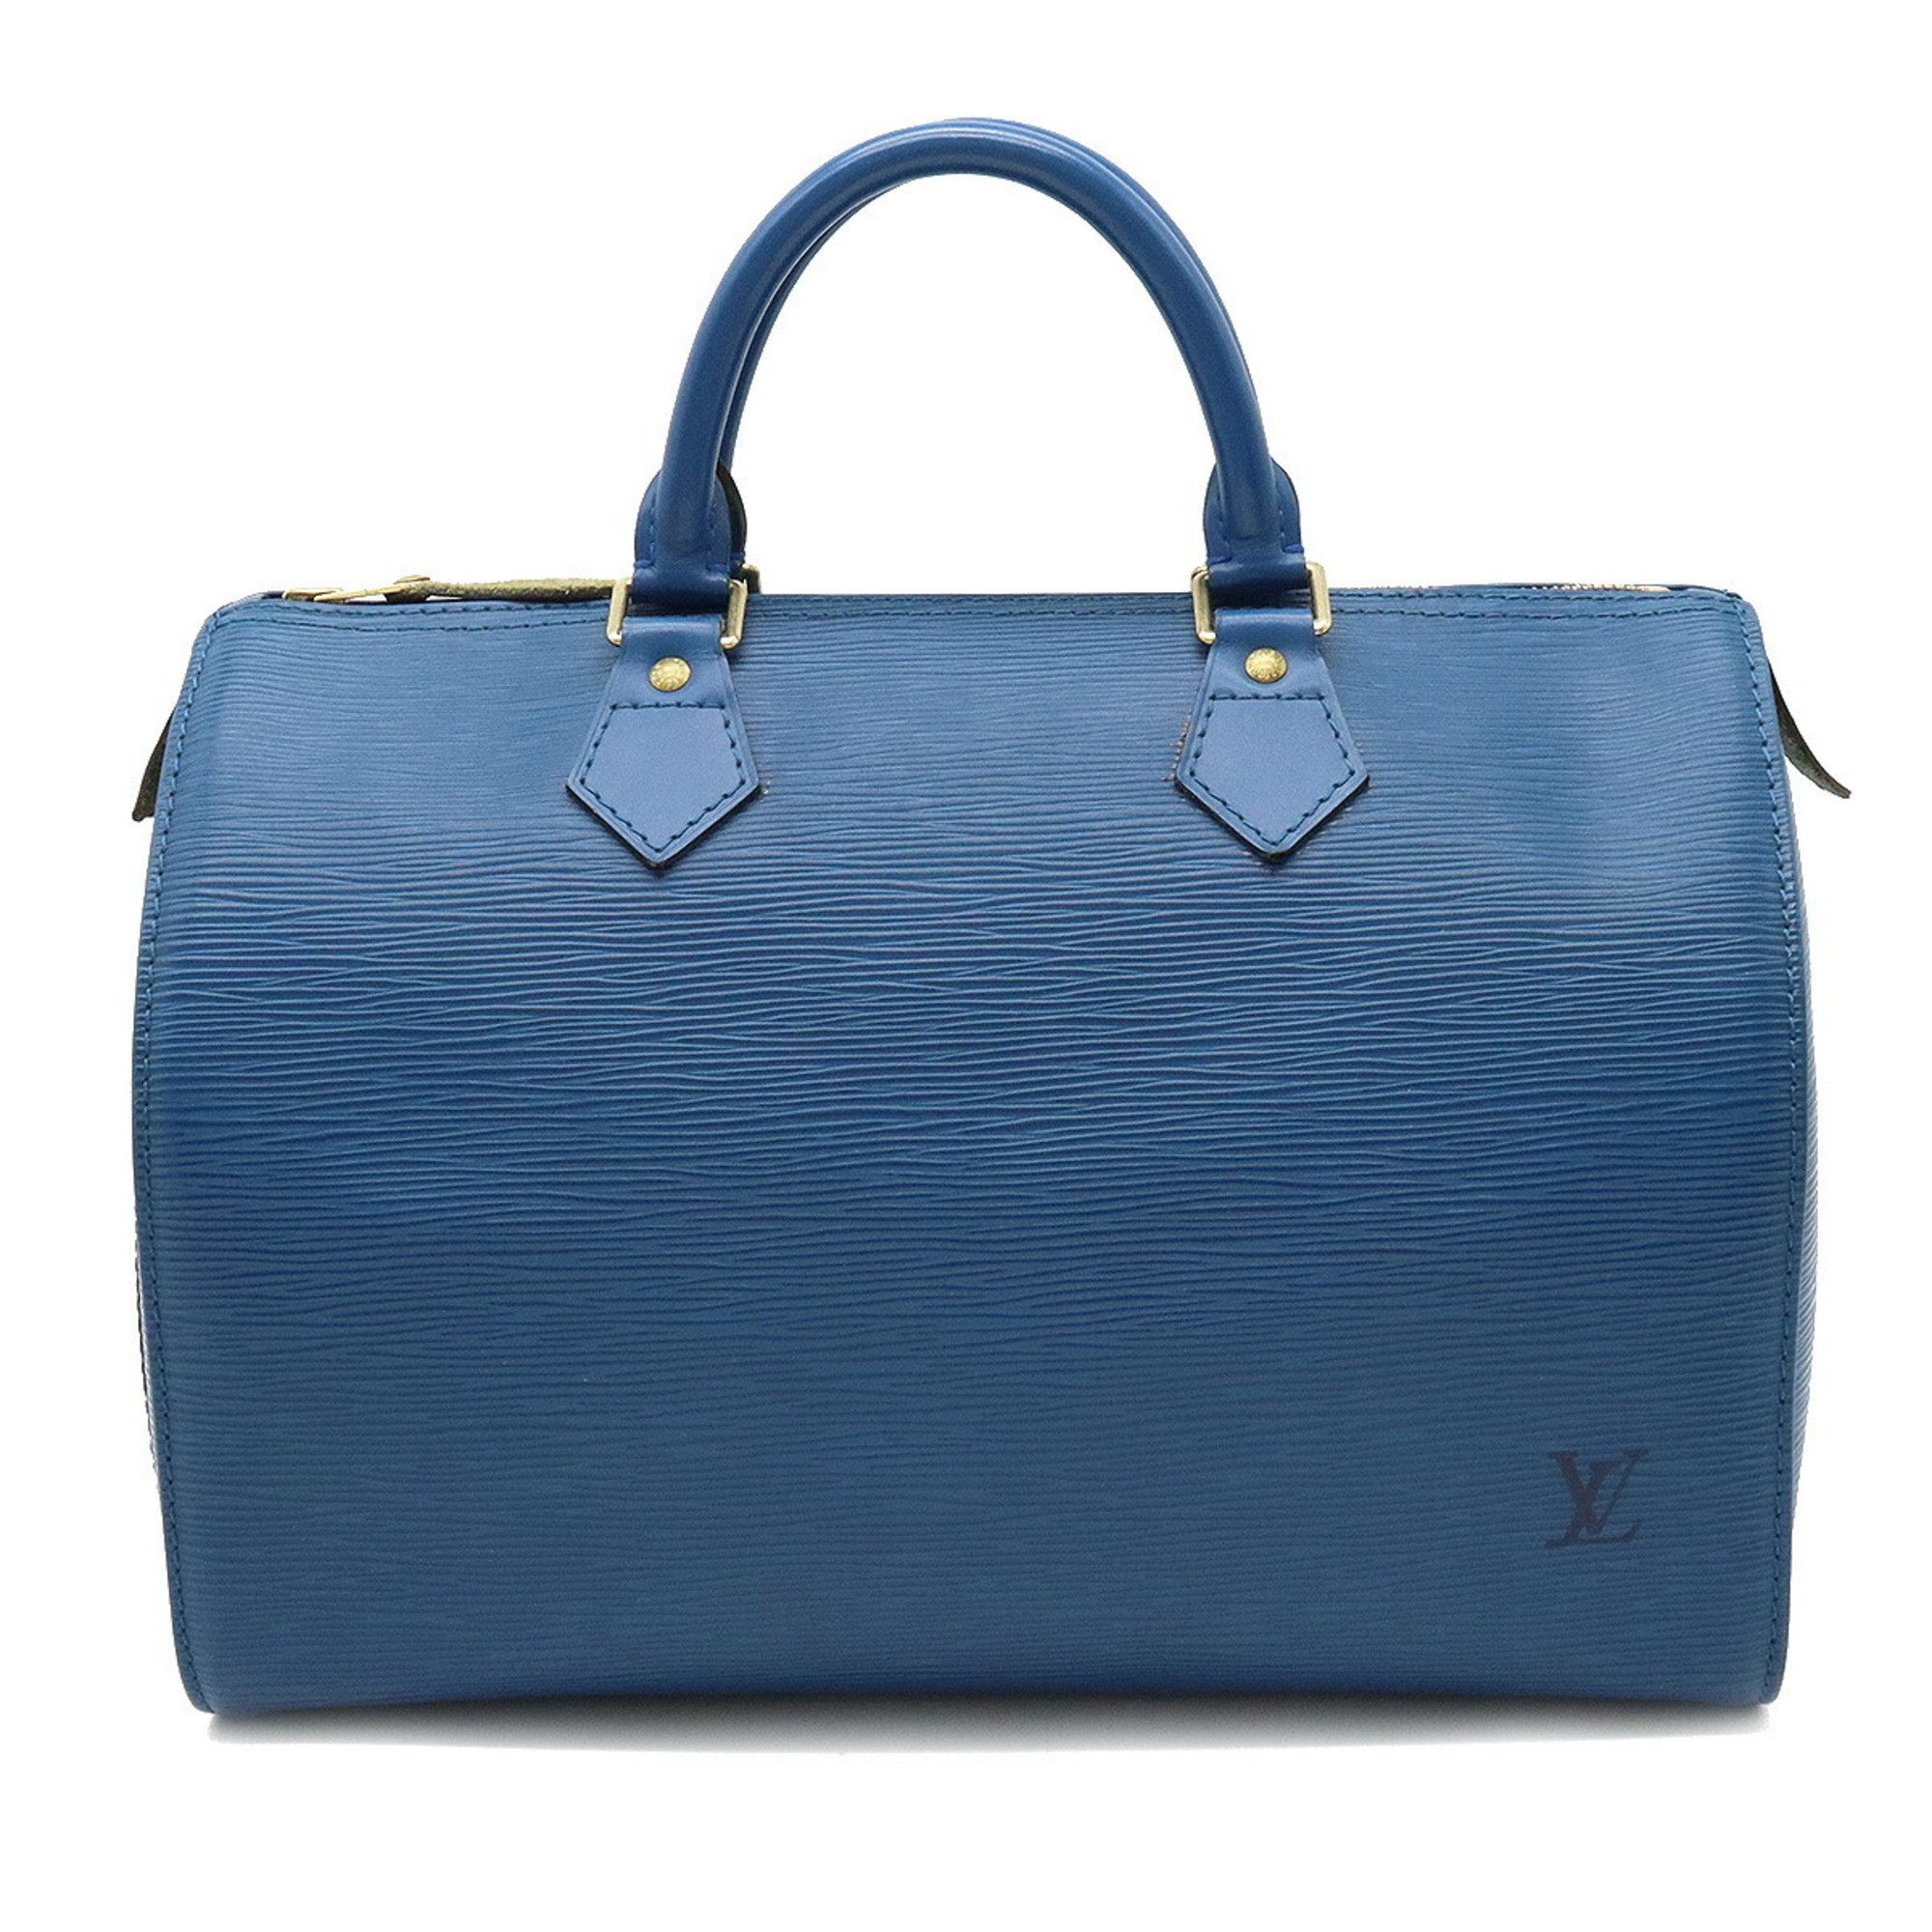 LOUIS VUITTON Handbag M43005 Toledo Blue Epi Leather Boston bag Speedy 30  used